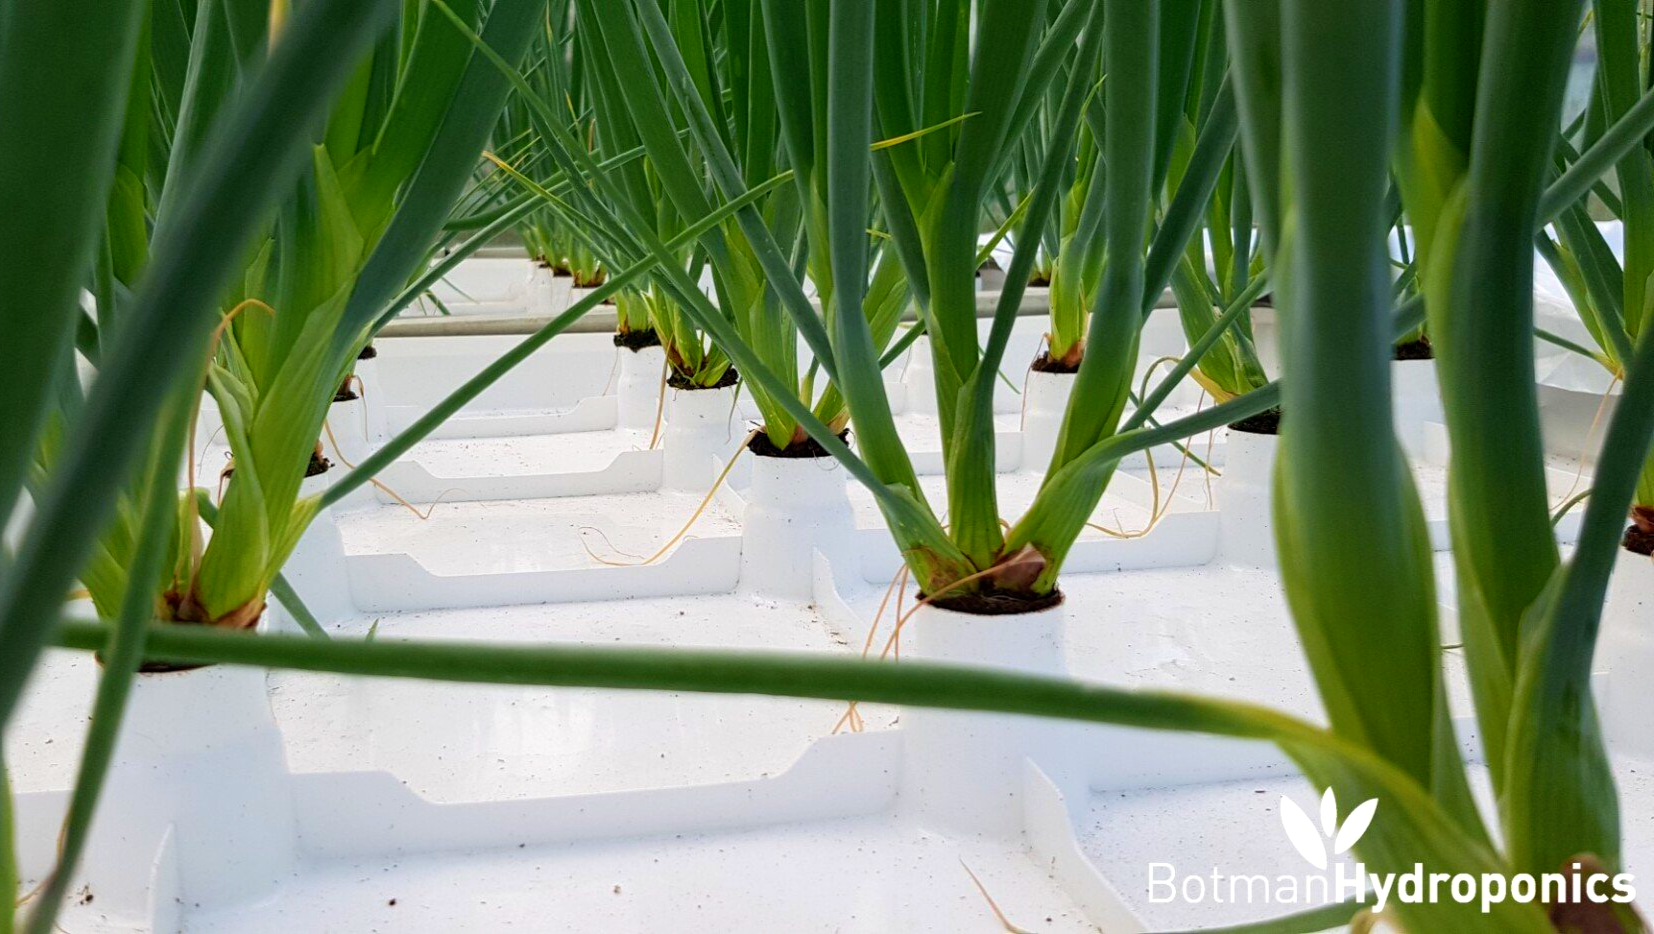 Spring onions on Botman Hydroponics Floating Raft